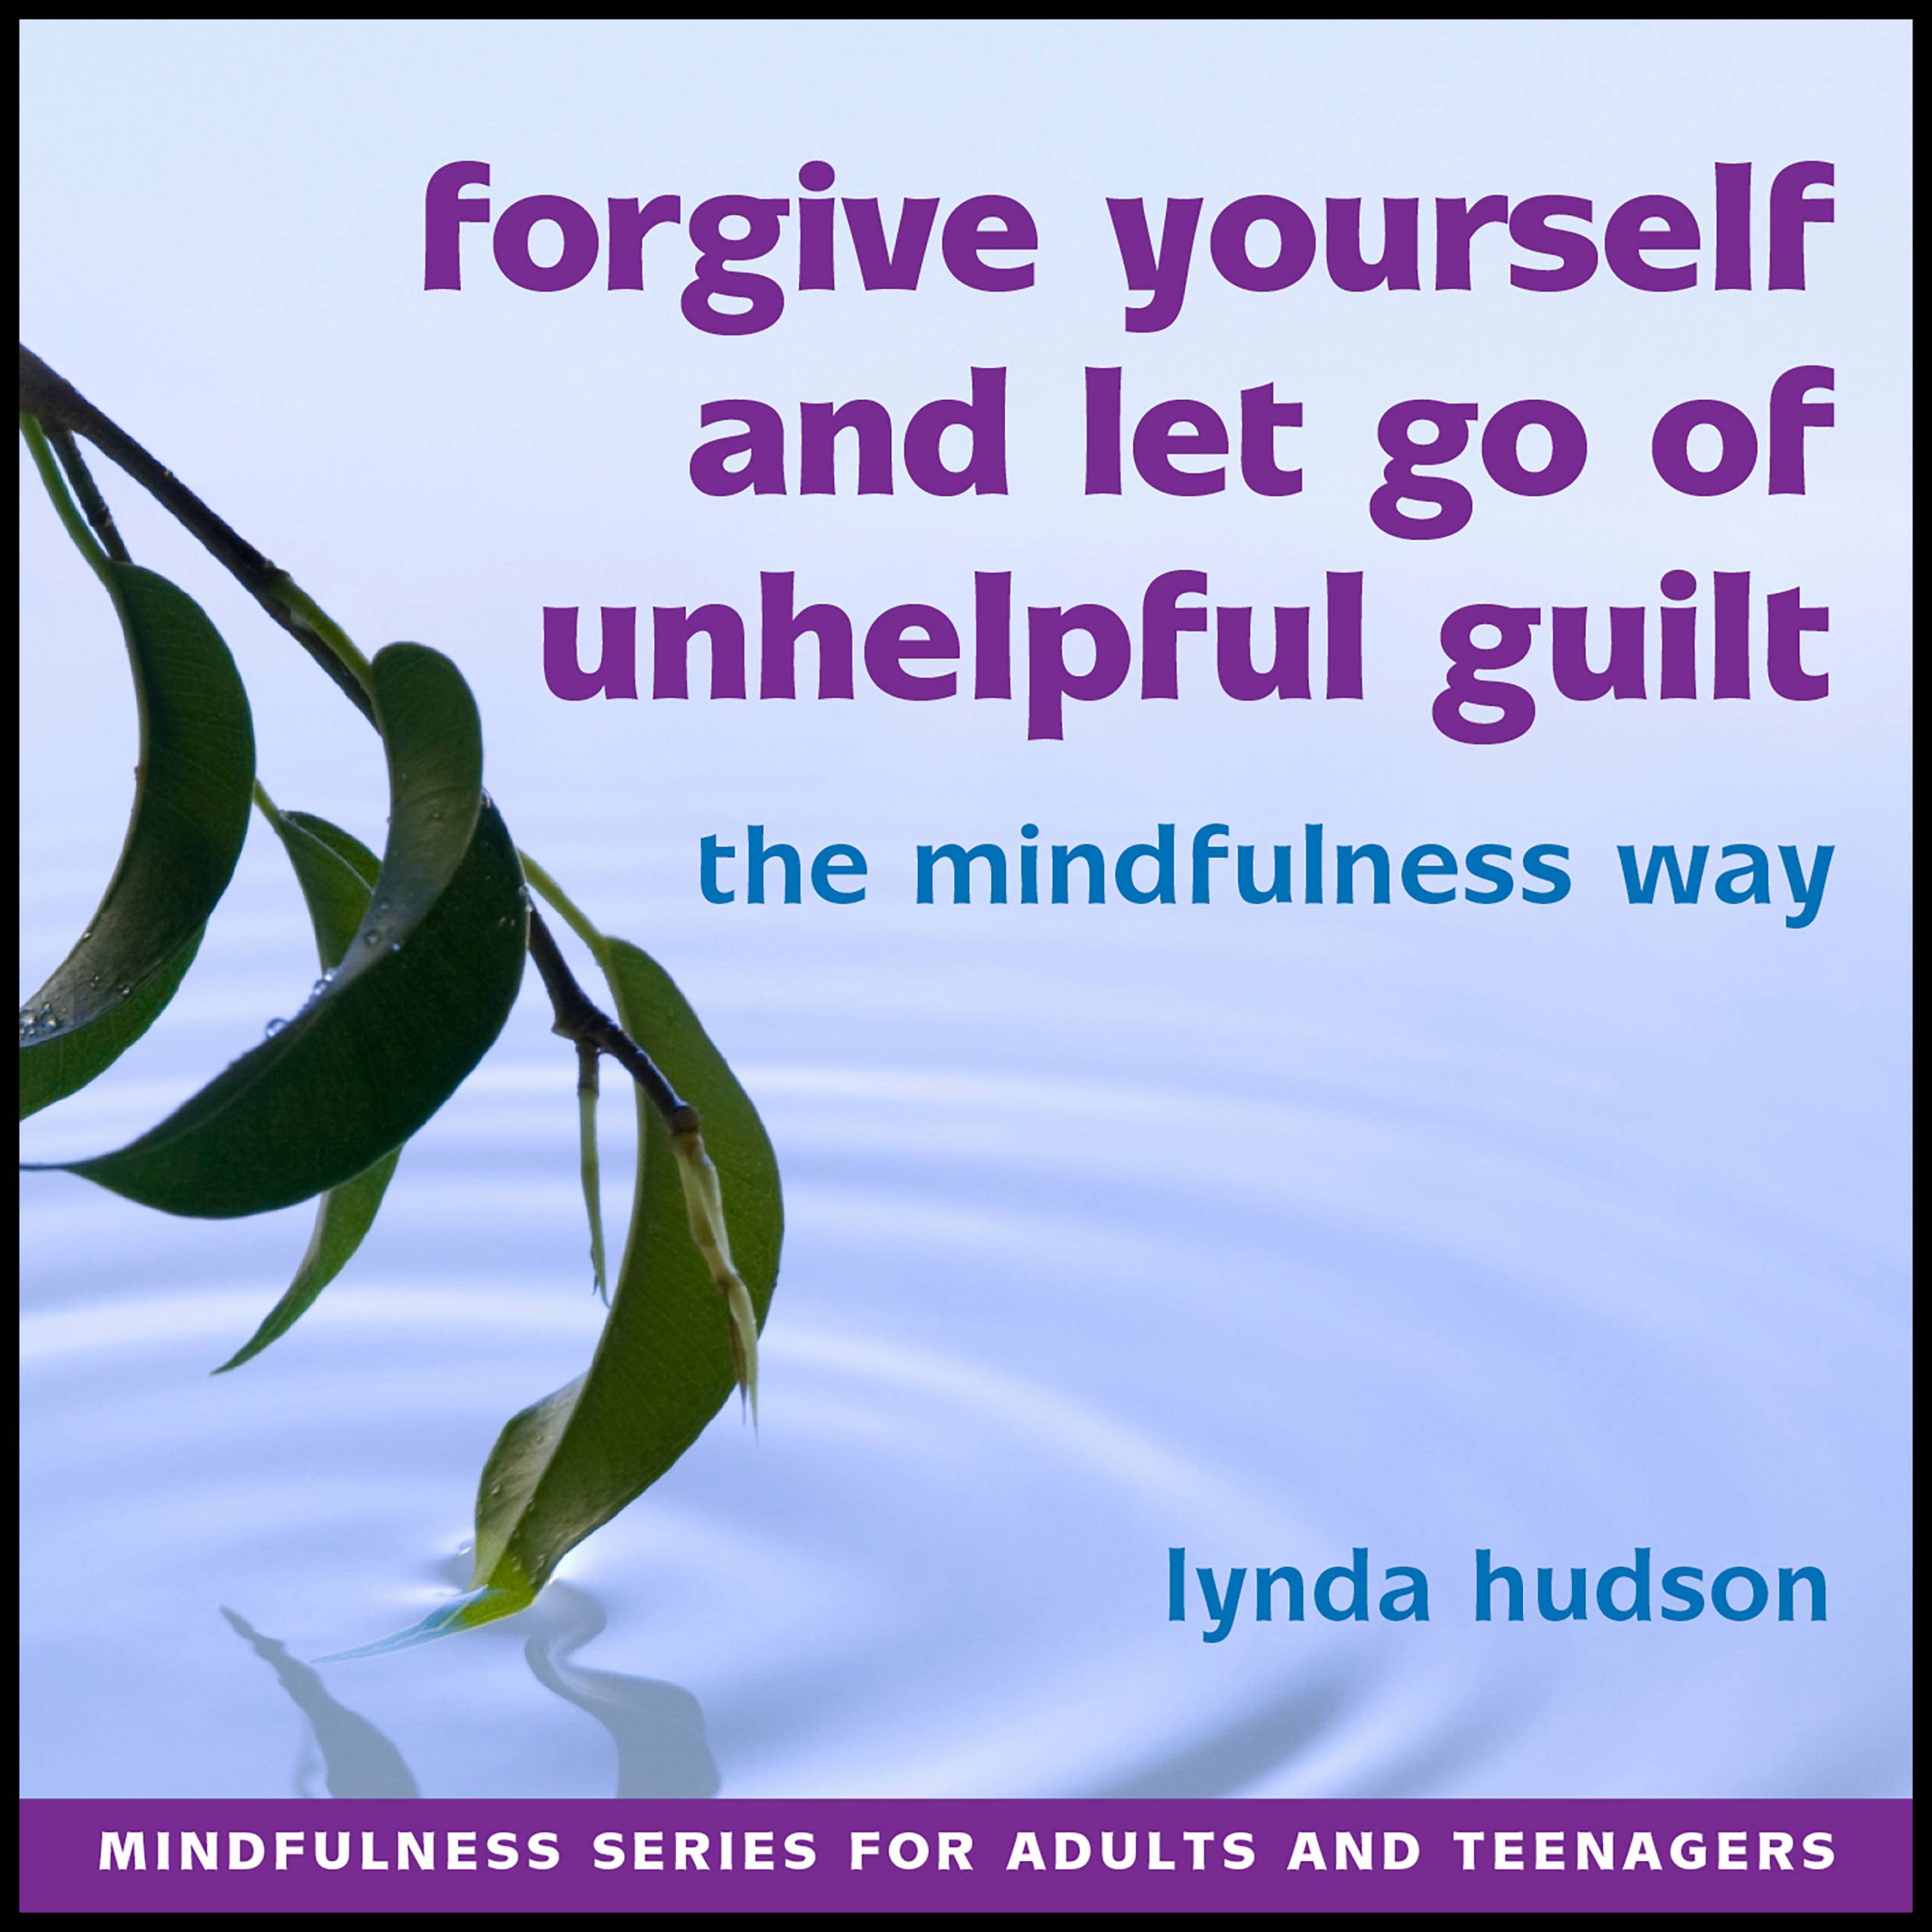 Forgive yourself the mindfulness way